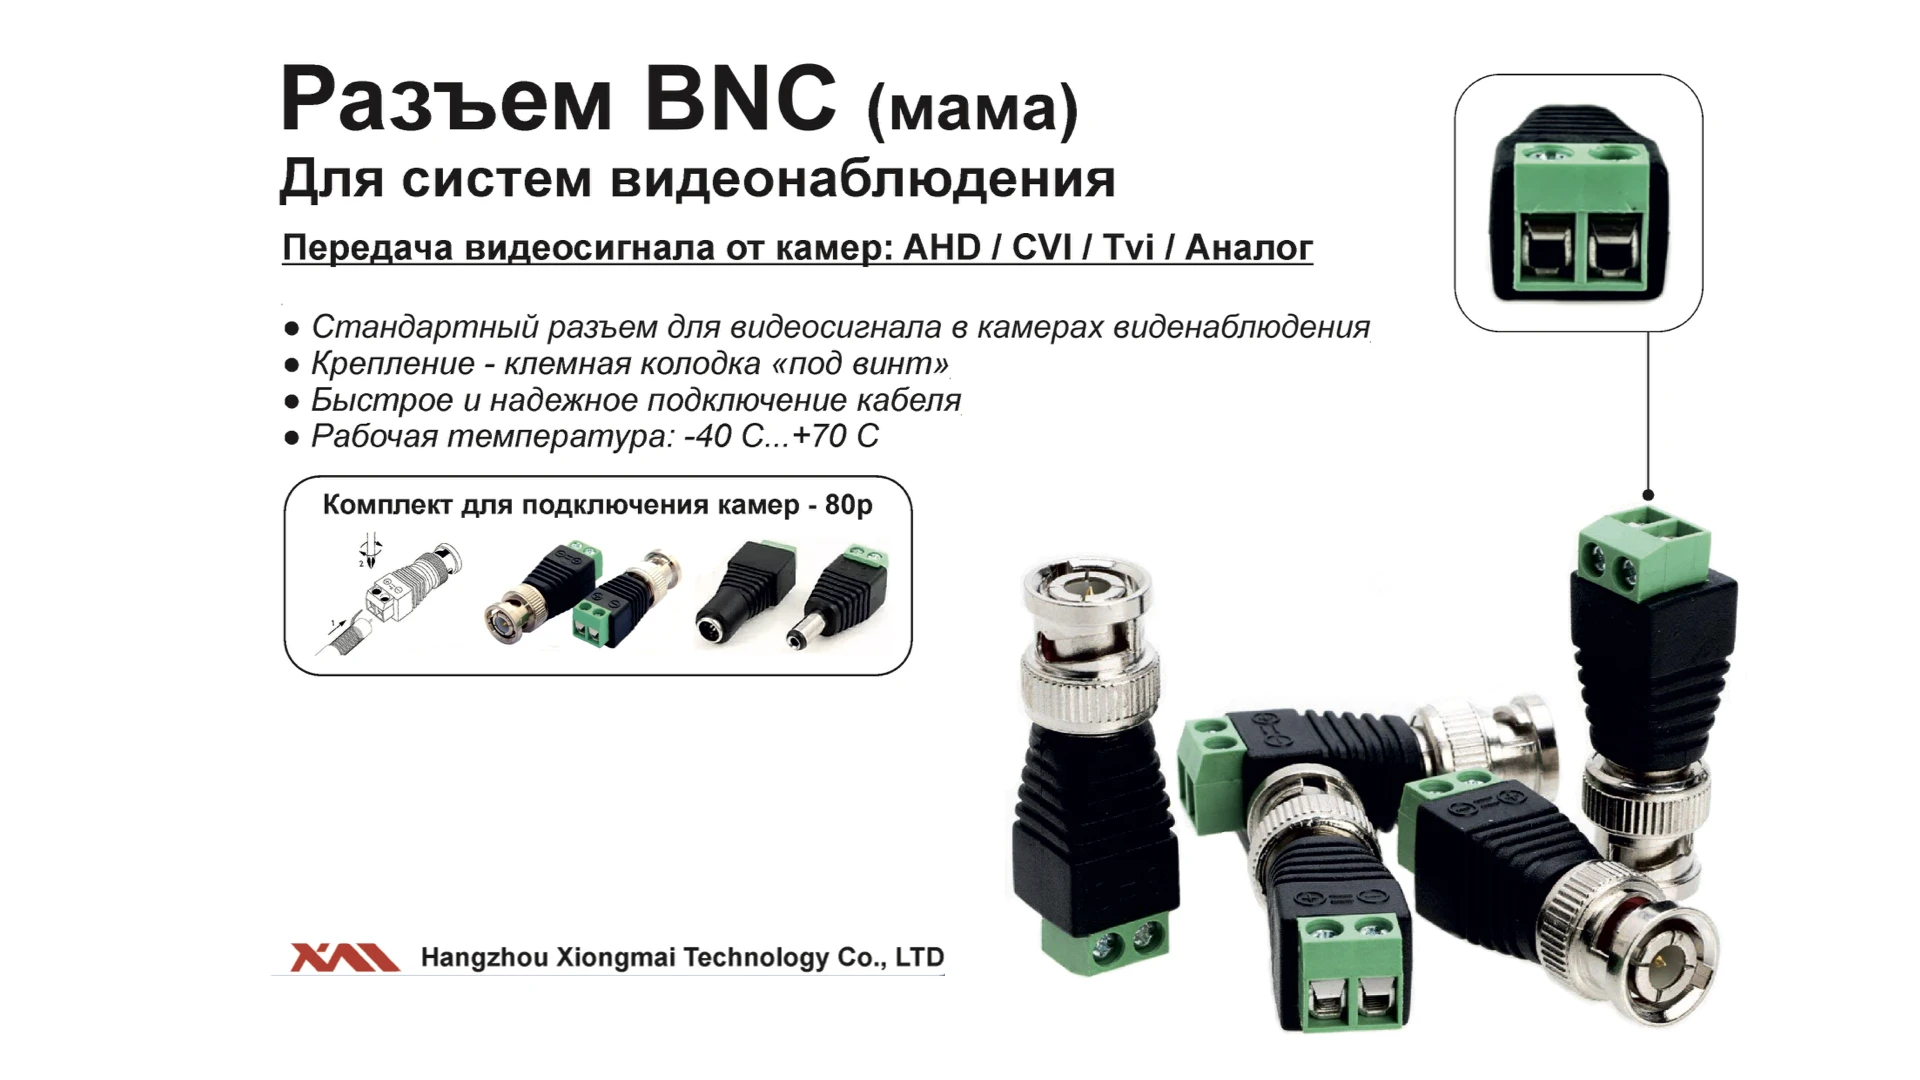 BNC connector for video surveillance systems. Standard CCTV cameras (bnc-01 (mom)) home improvement diy electronics Connectors Terminals Electrical Equipment Supplies